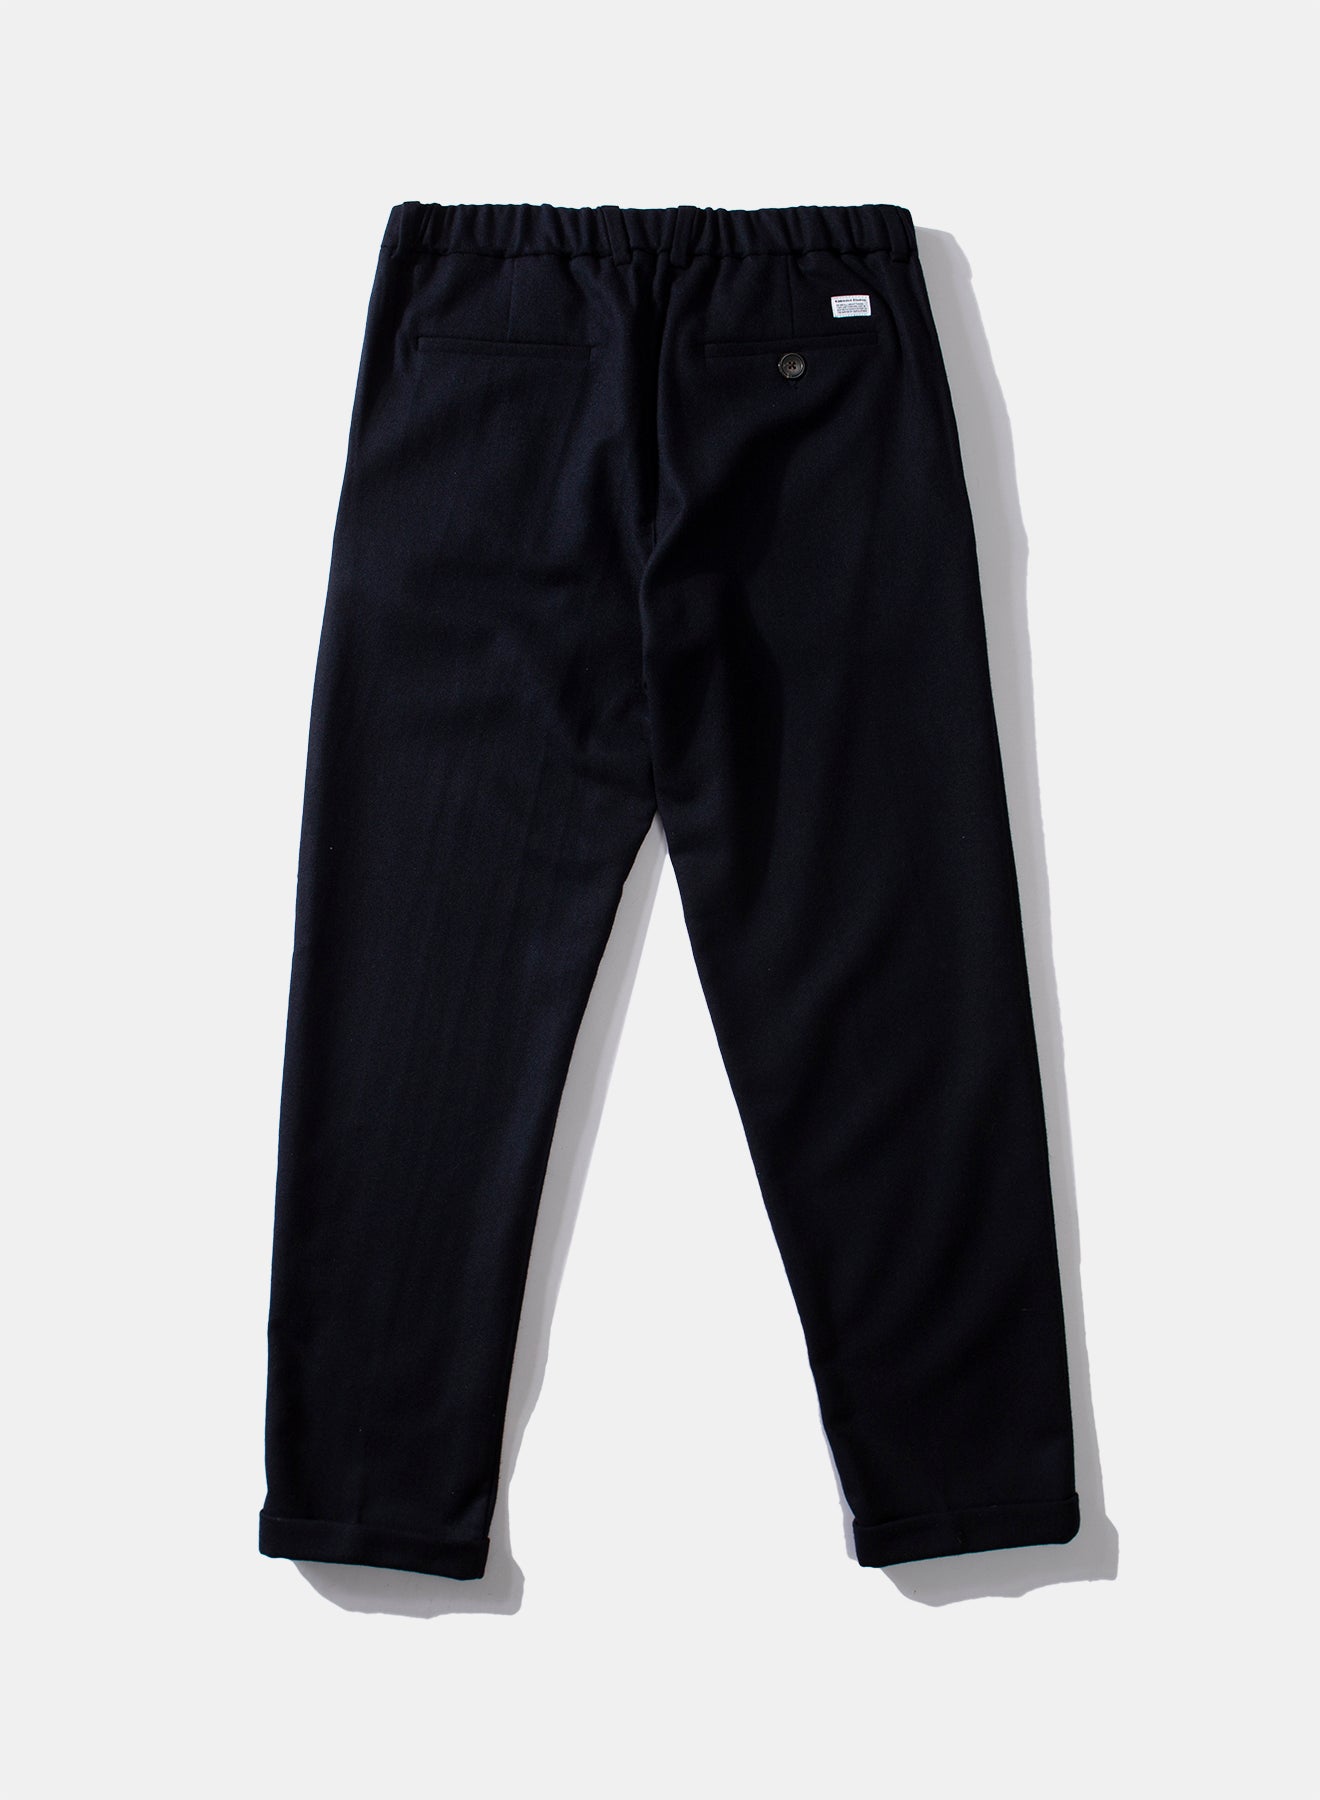 
                  
                    Navy Jack Pants Trousers
                  
                